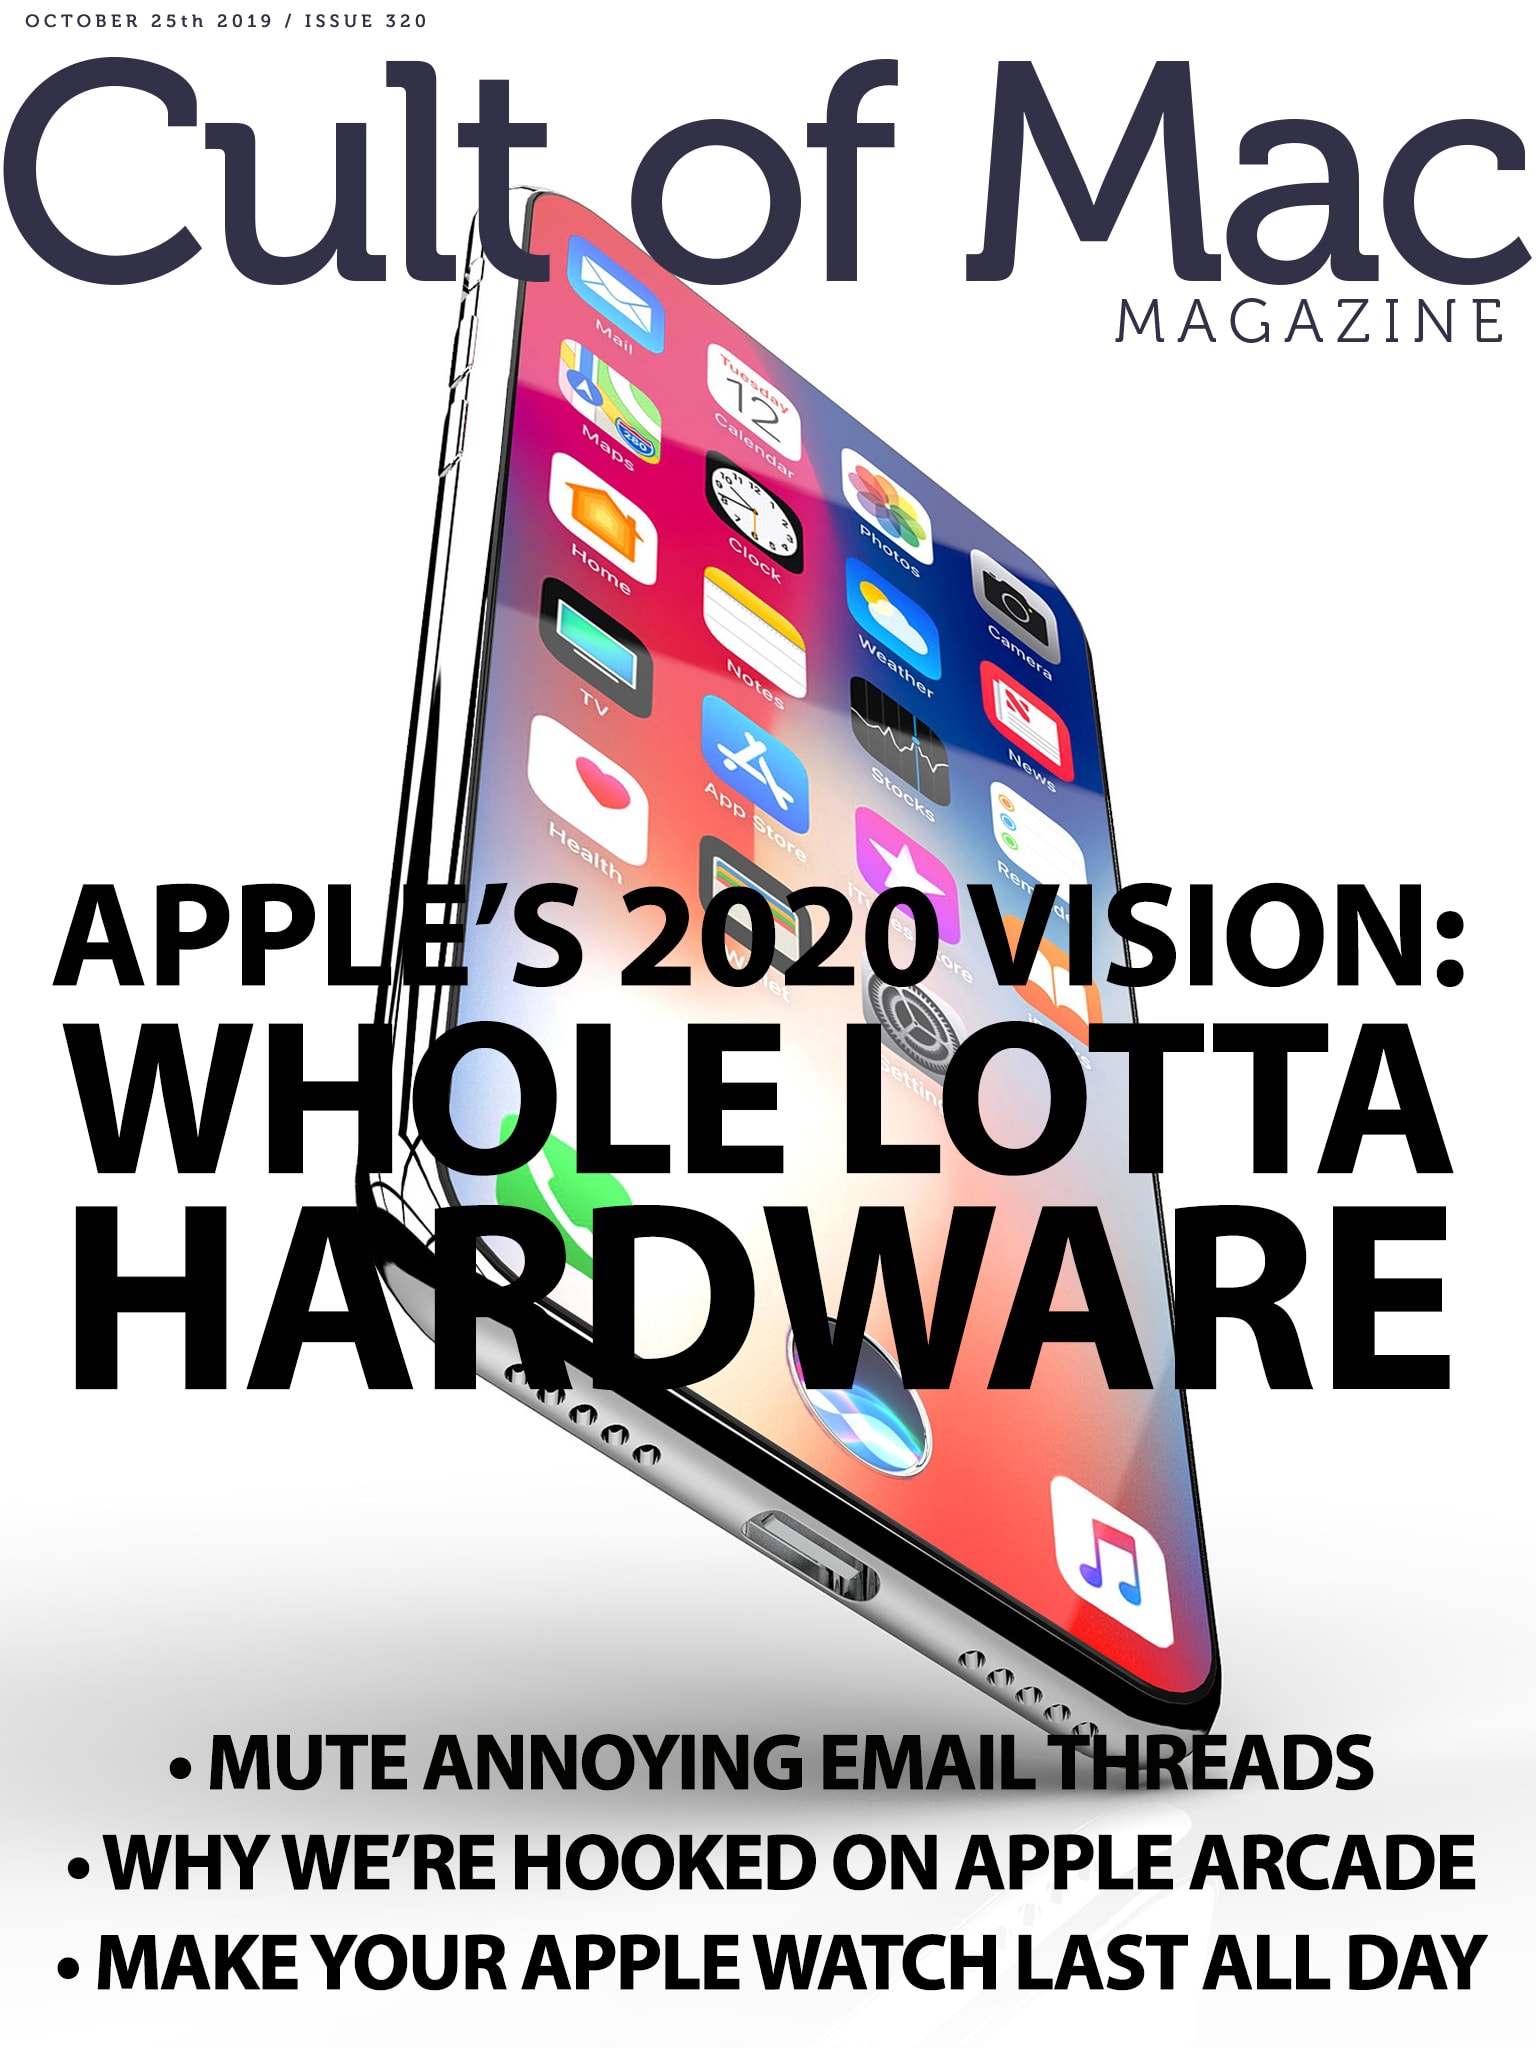 Apple's 2020 vision: Whole lotta hardware